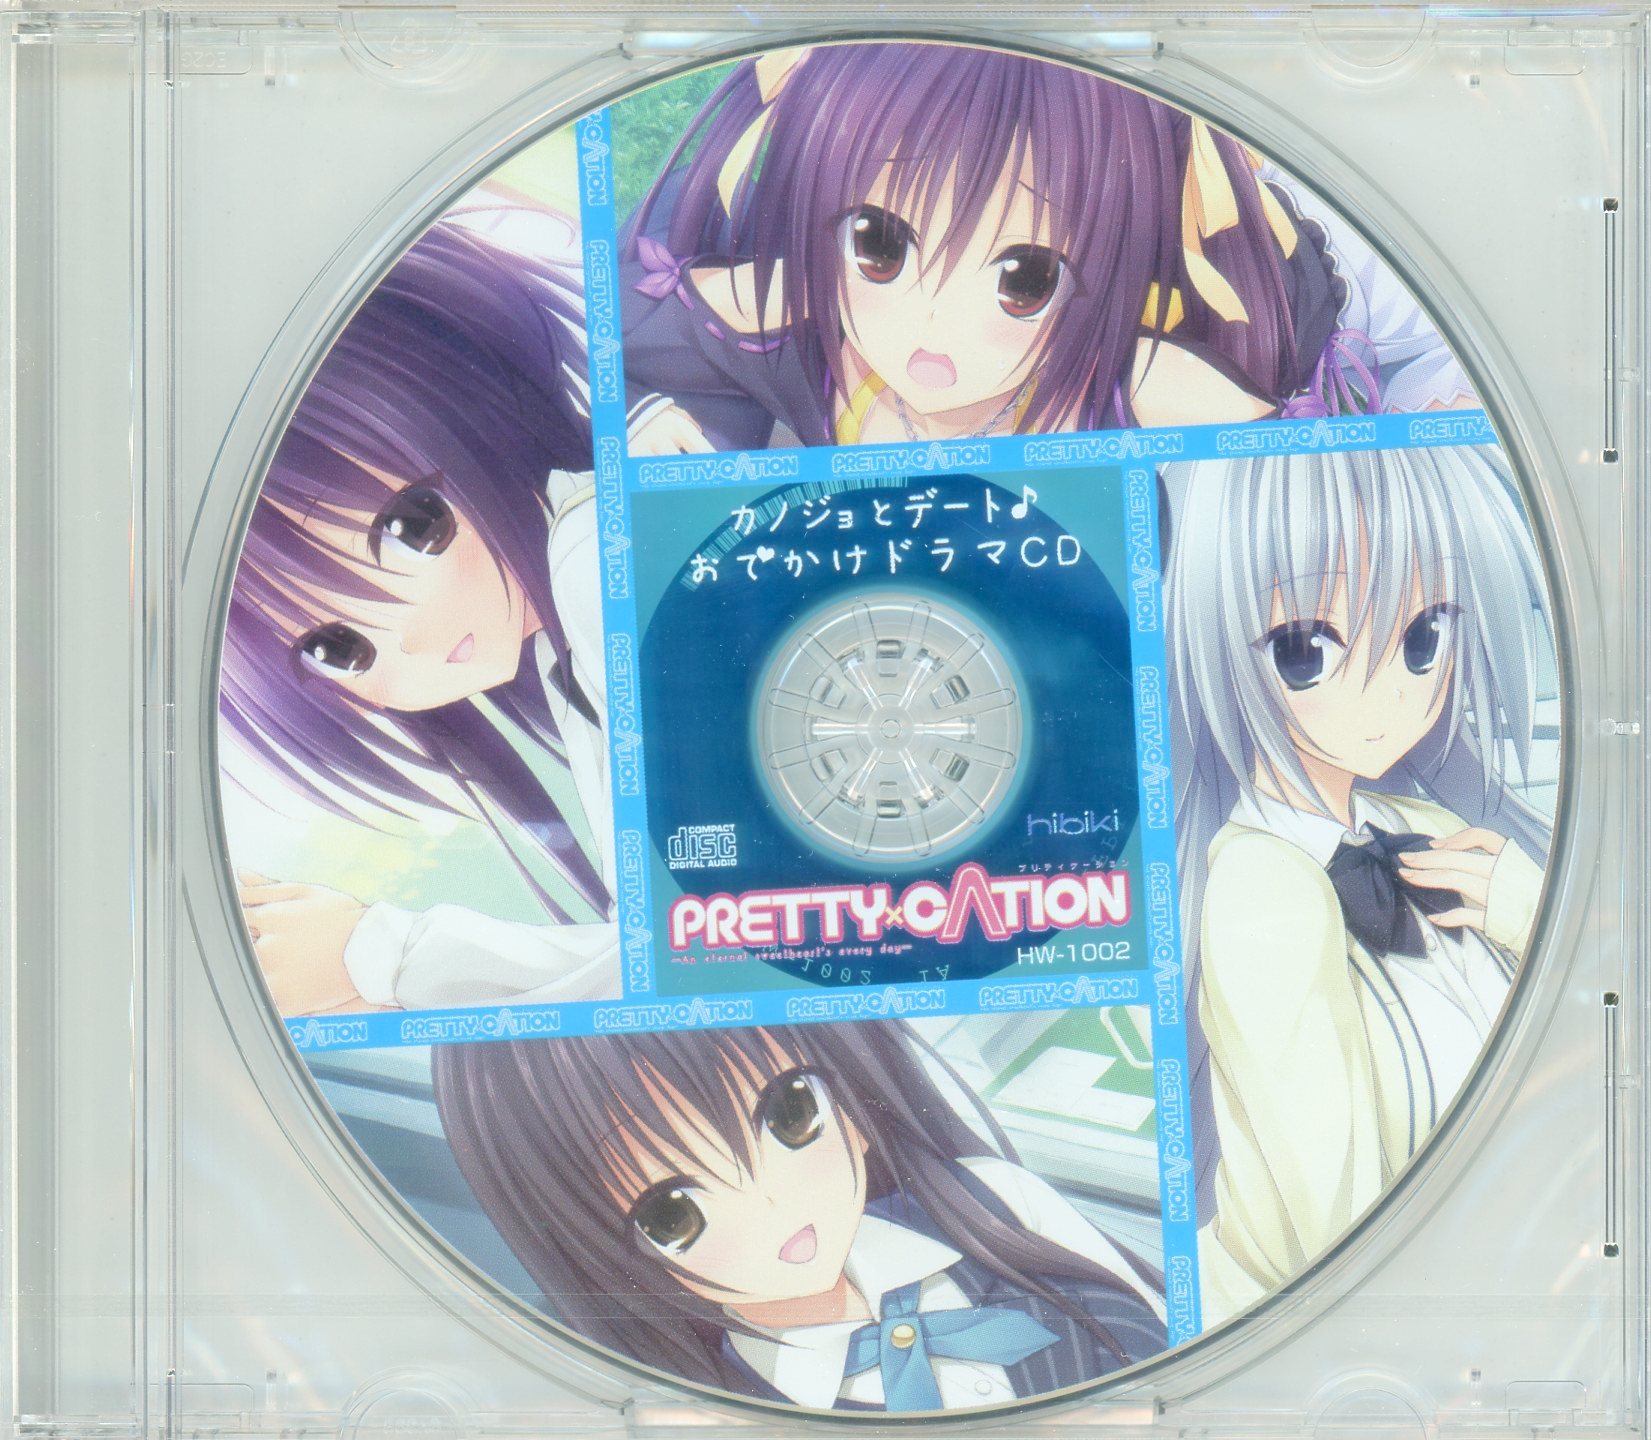 PRETTY×CATION ソフマップ ドラマCD アニメ | lockerdays.com